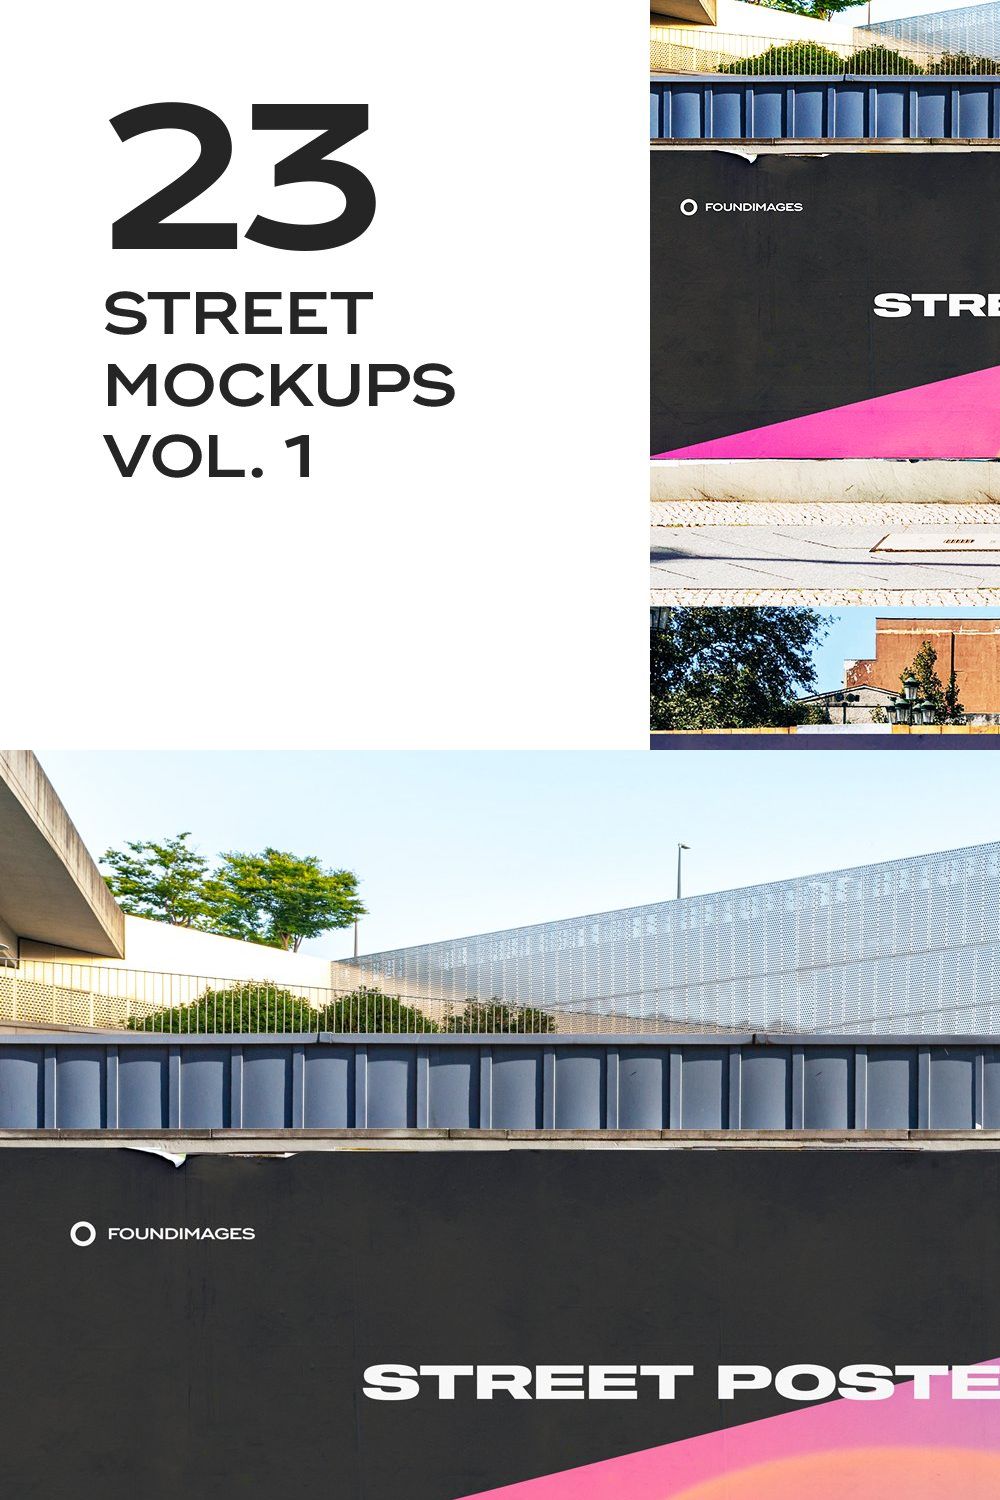 Street mockup template bundle vol.1 pinterest preview image.